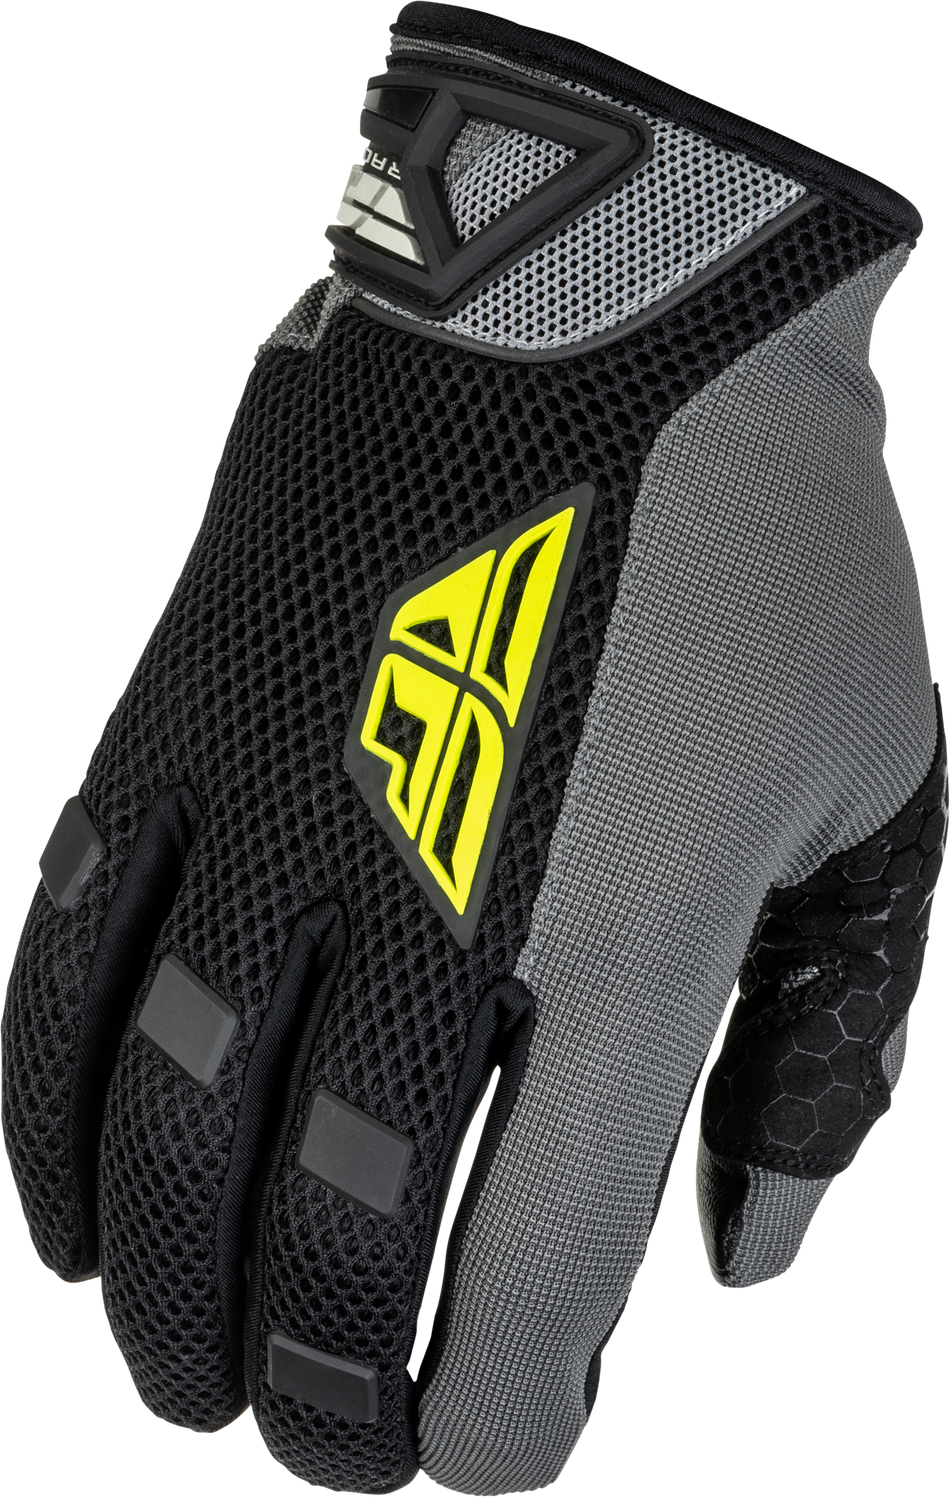 FLY RACING Coolpro Gloves Black/Hi-Vis Xl 476-4027X